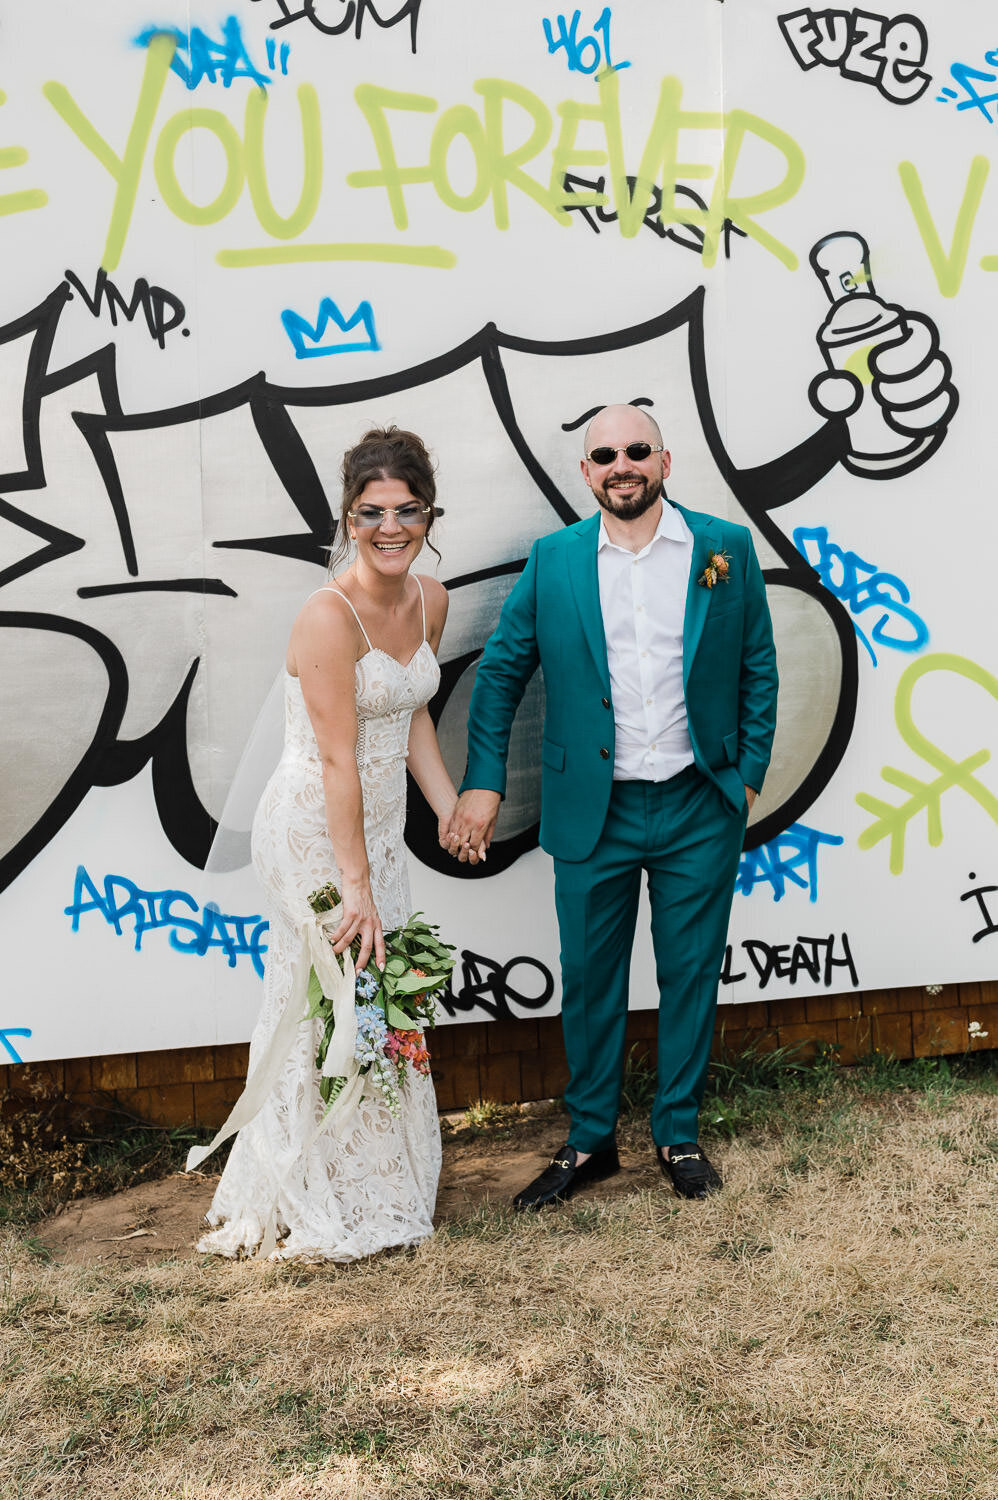 Wedding couple portrait in front of graffiti.